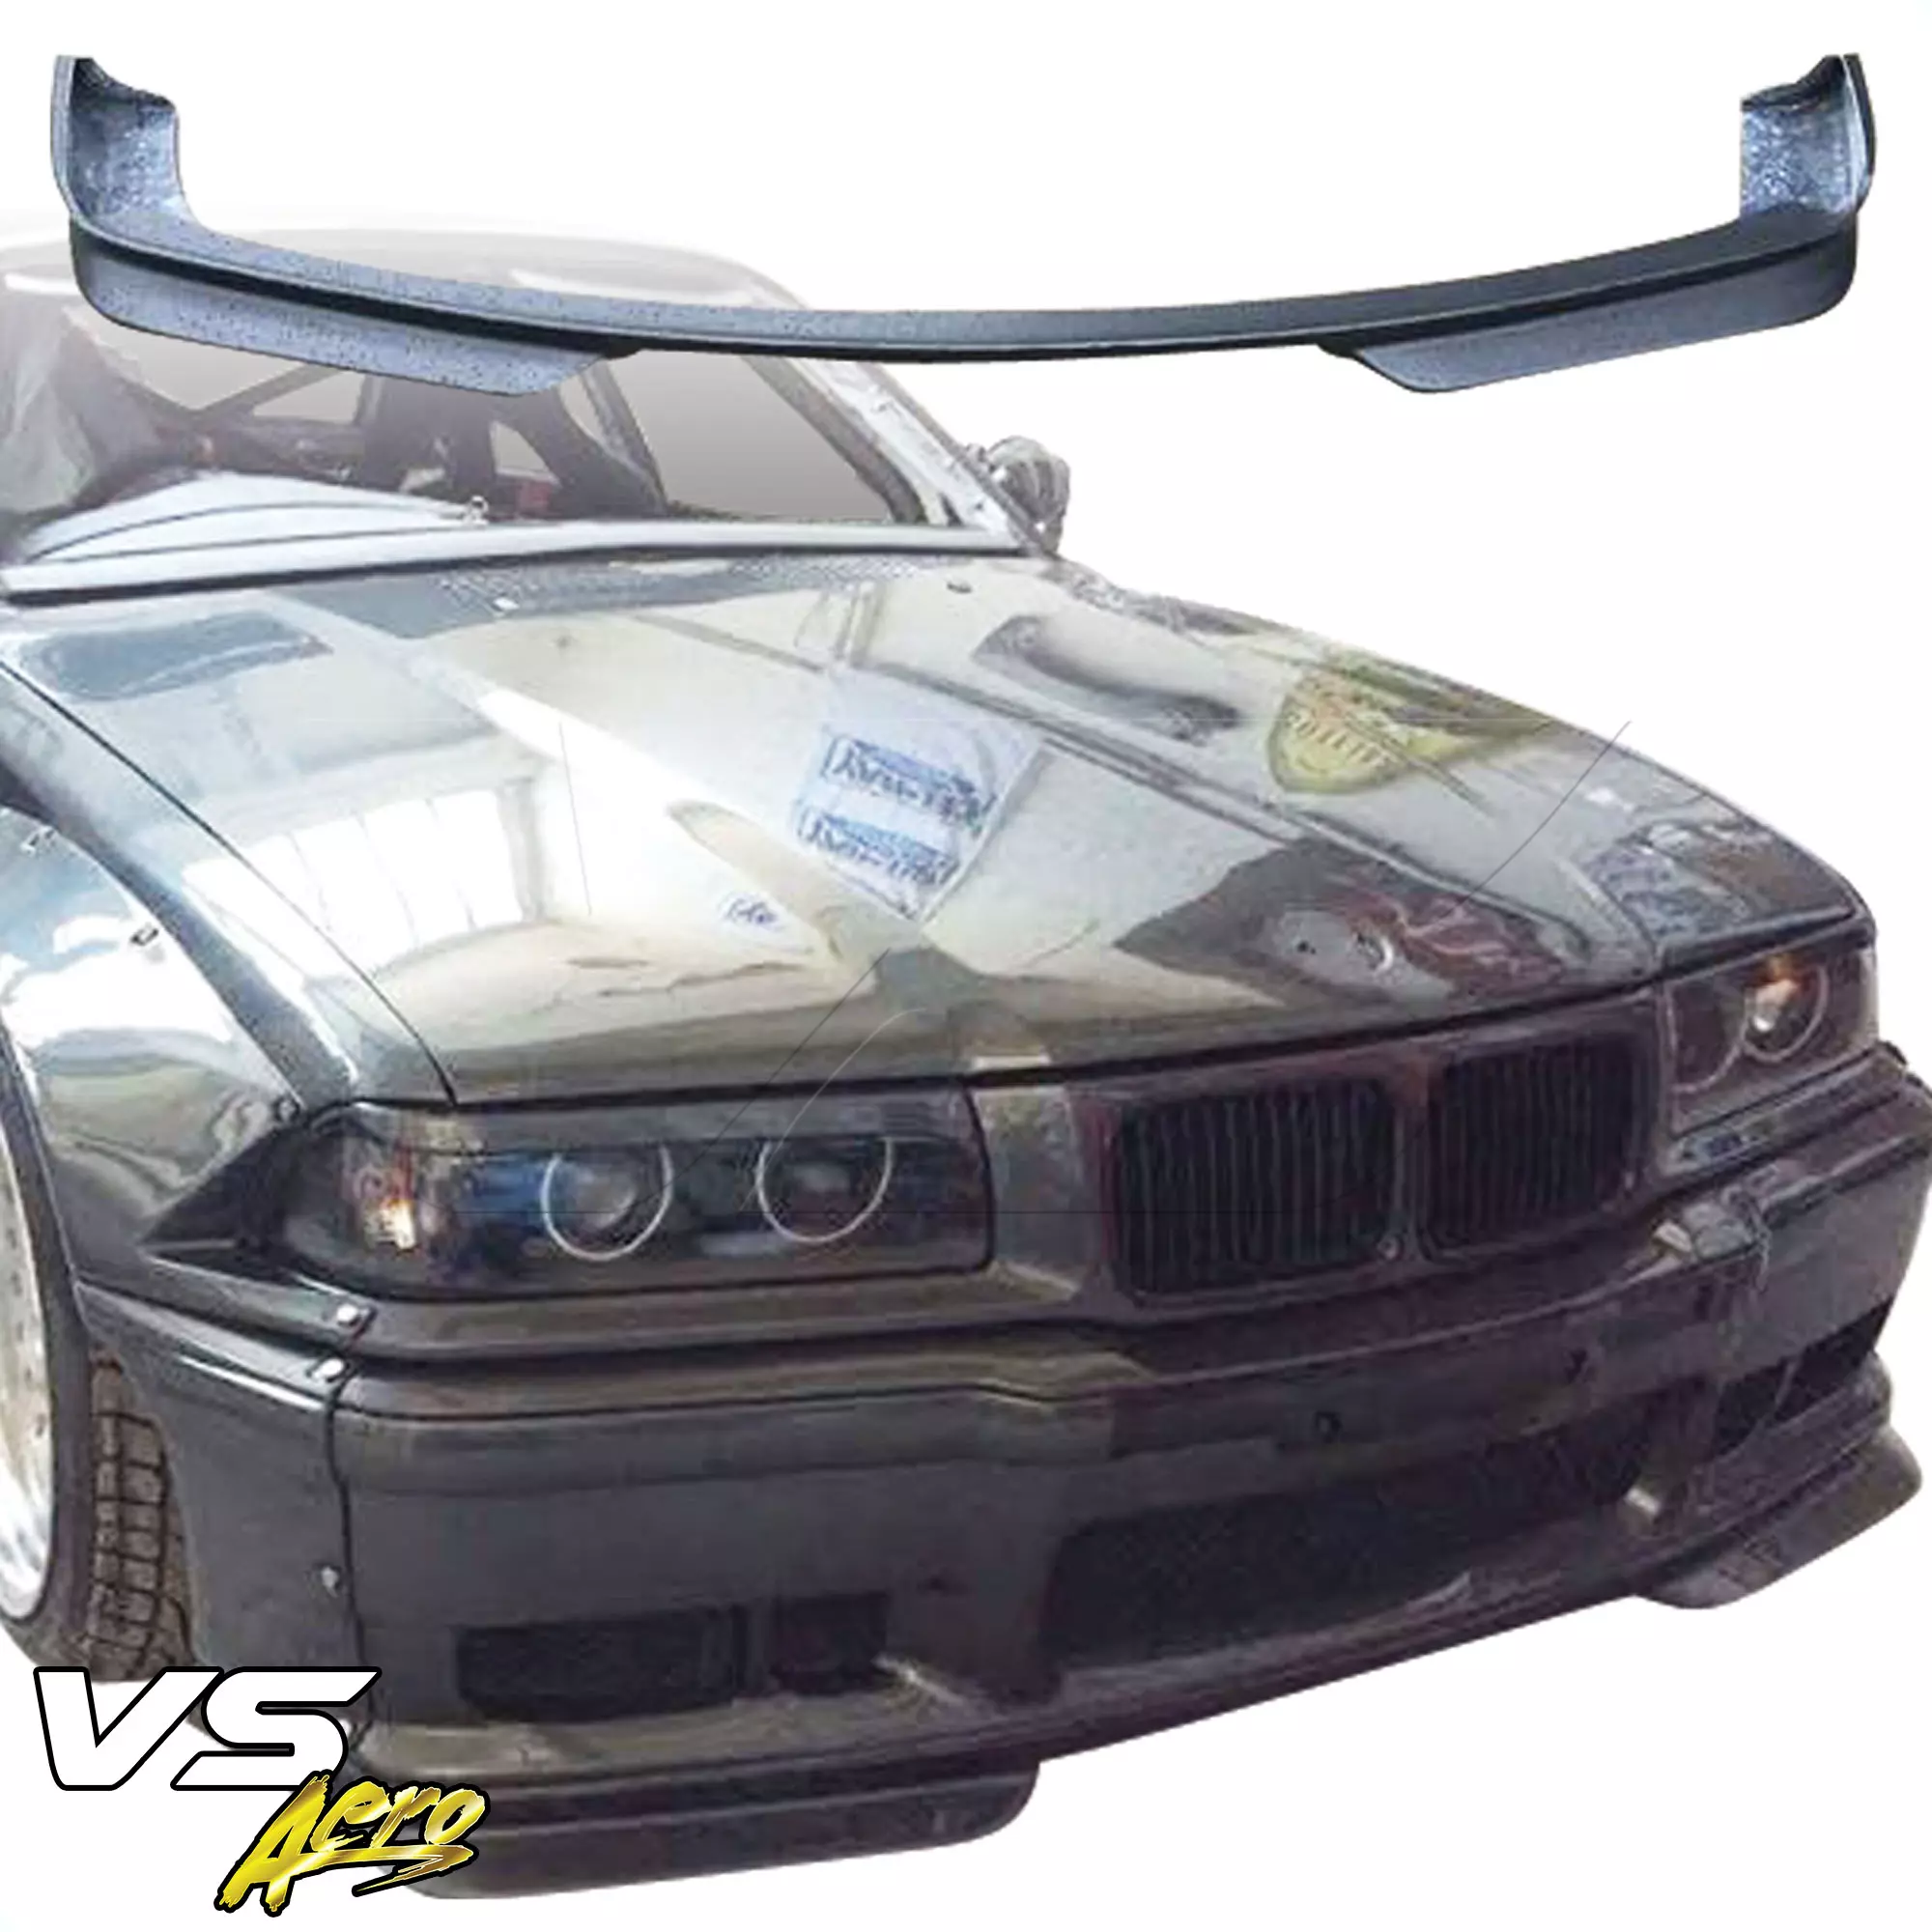 VSaero FRP TKYO Wide Body Kit 11pc > BMW 3-Series 325i 328i E36 1992-1998 > 2dr Coupe - Image 11